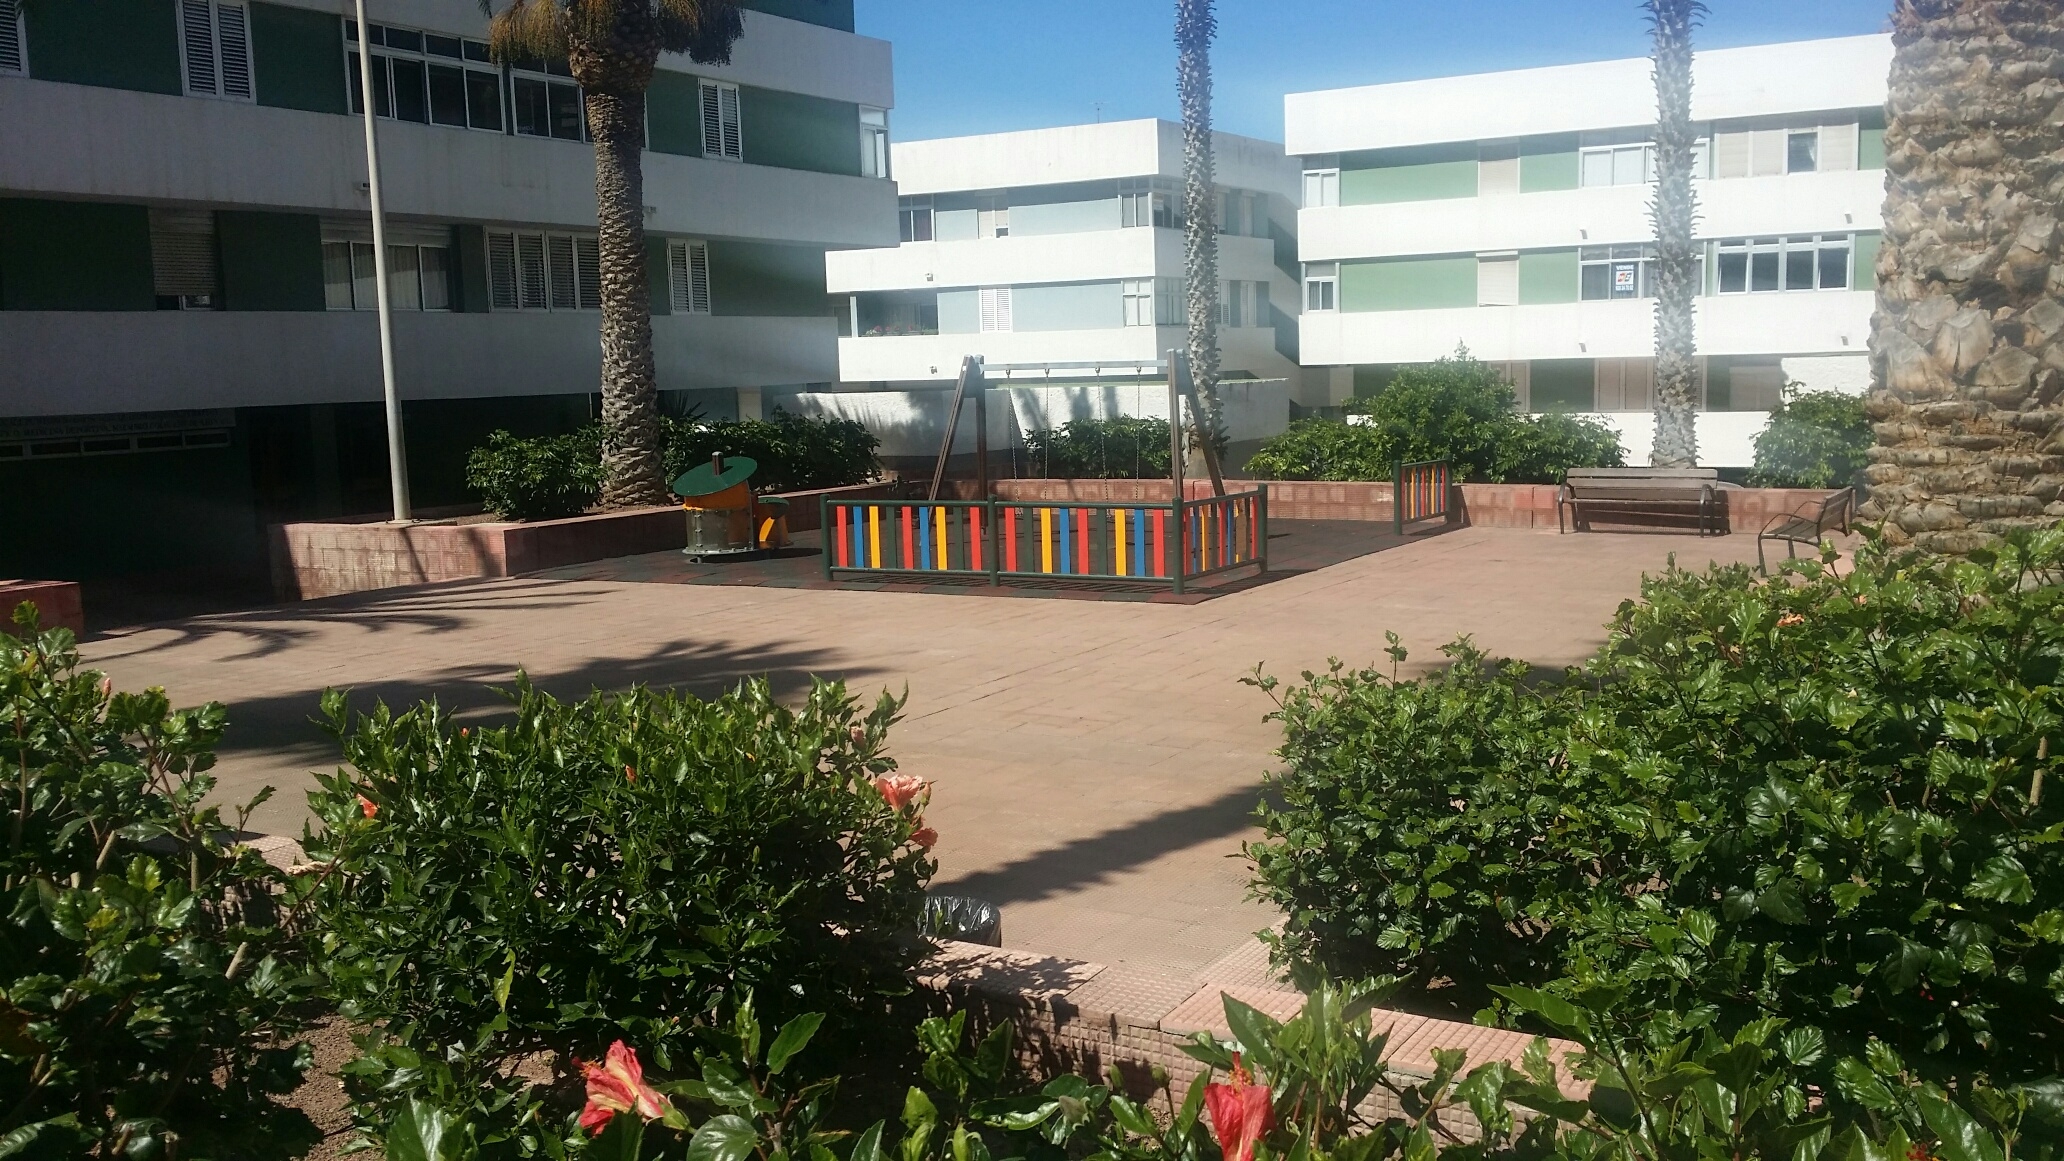 PlazaCarmeloArtiles